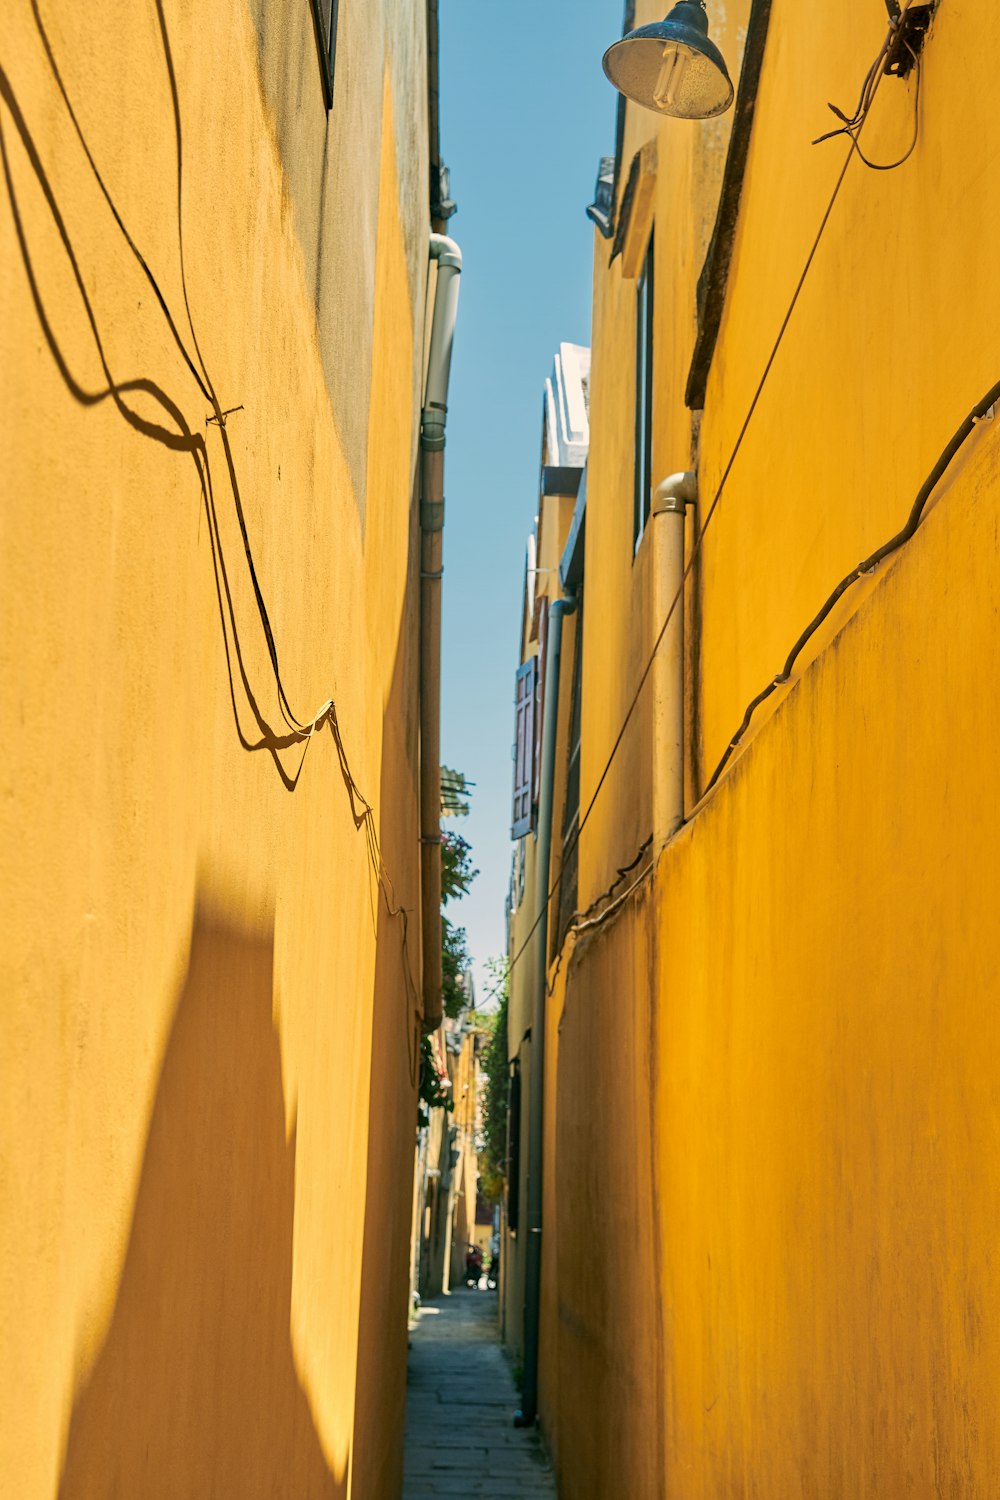 alleyway between yellow walls during daytime